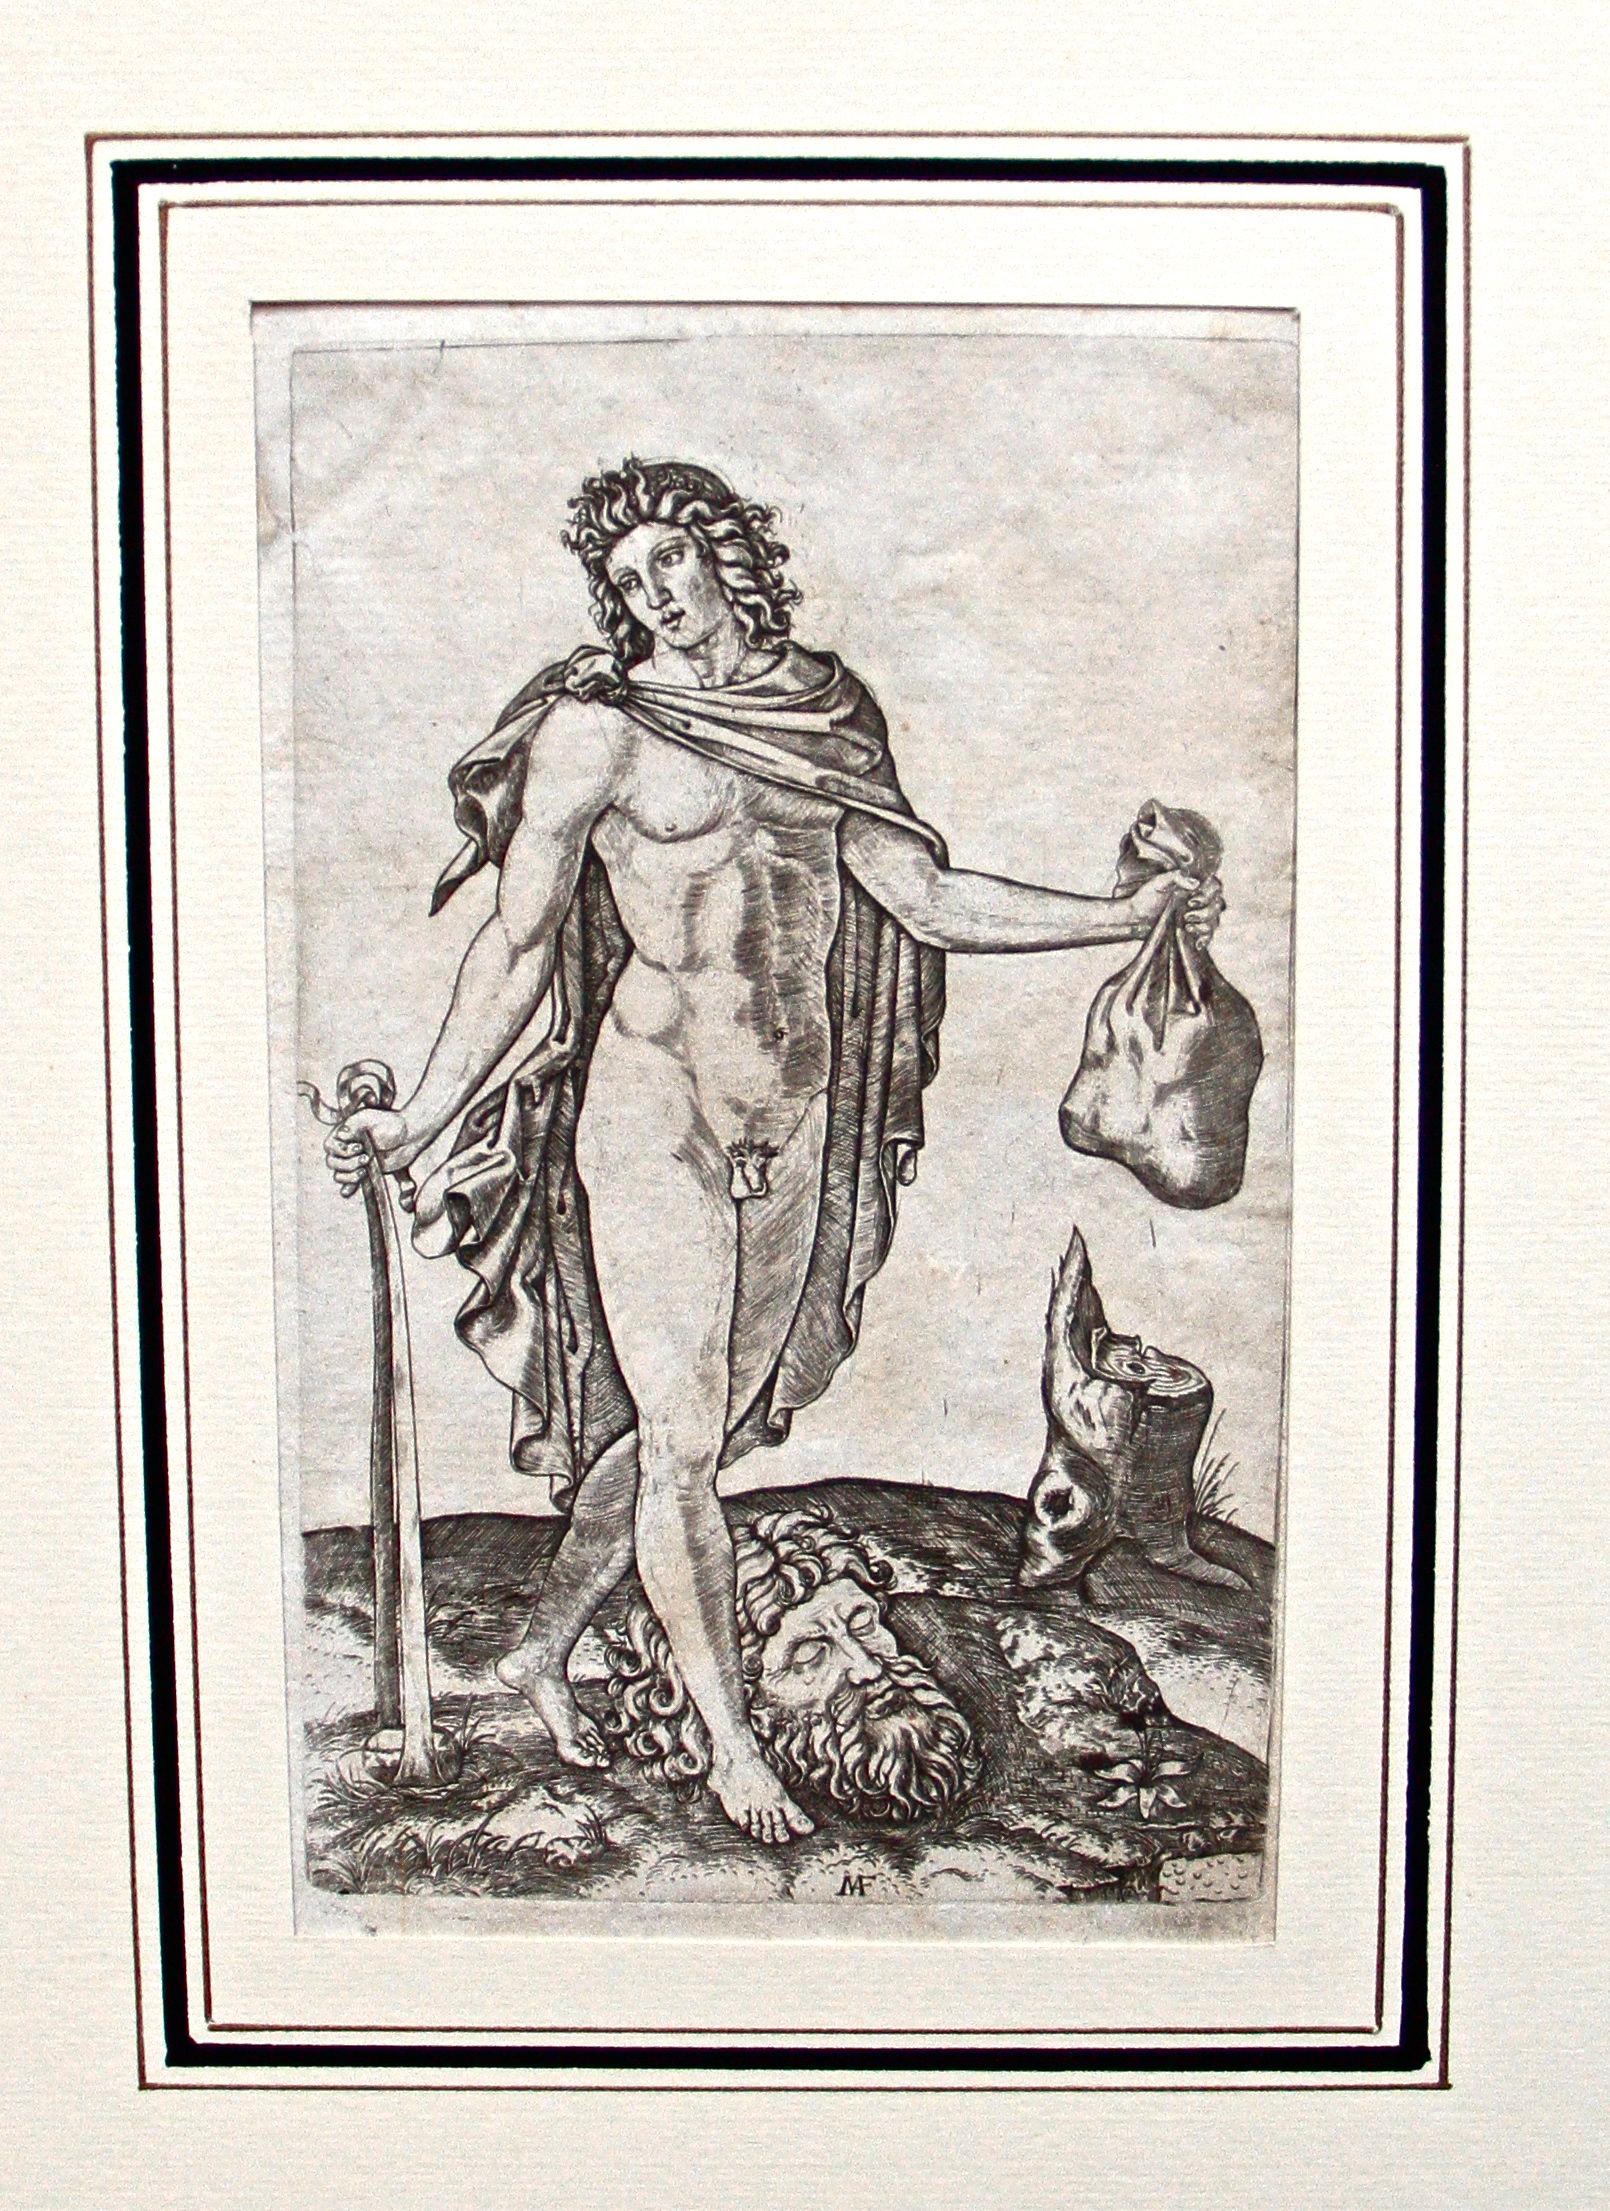 Davide Vincitore di Golia - Original Etching 1530 by M. Raimondi 1530 ca. - Print by Marcantonio Raimondi